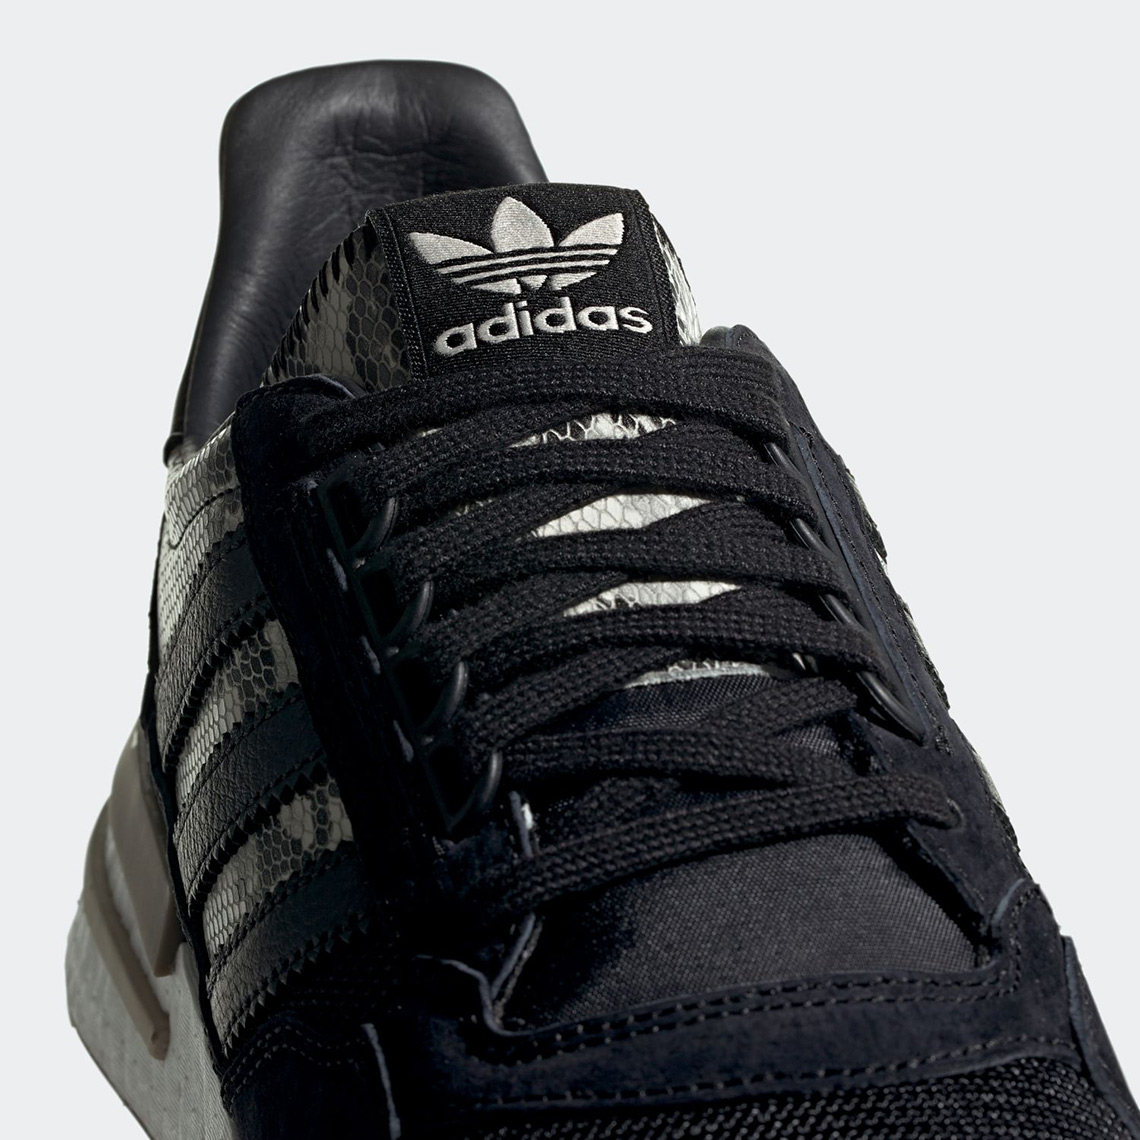 Adidas Zx 500 Rm Snakeskin 7924 Release Info Sneakernews Com